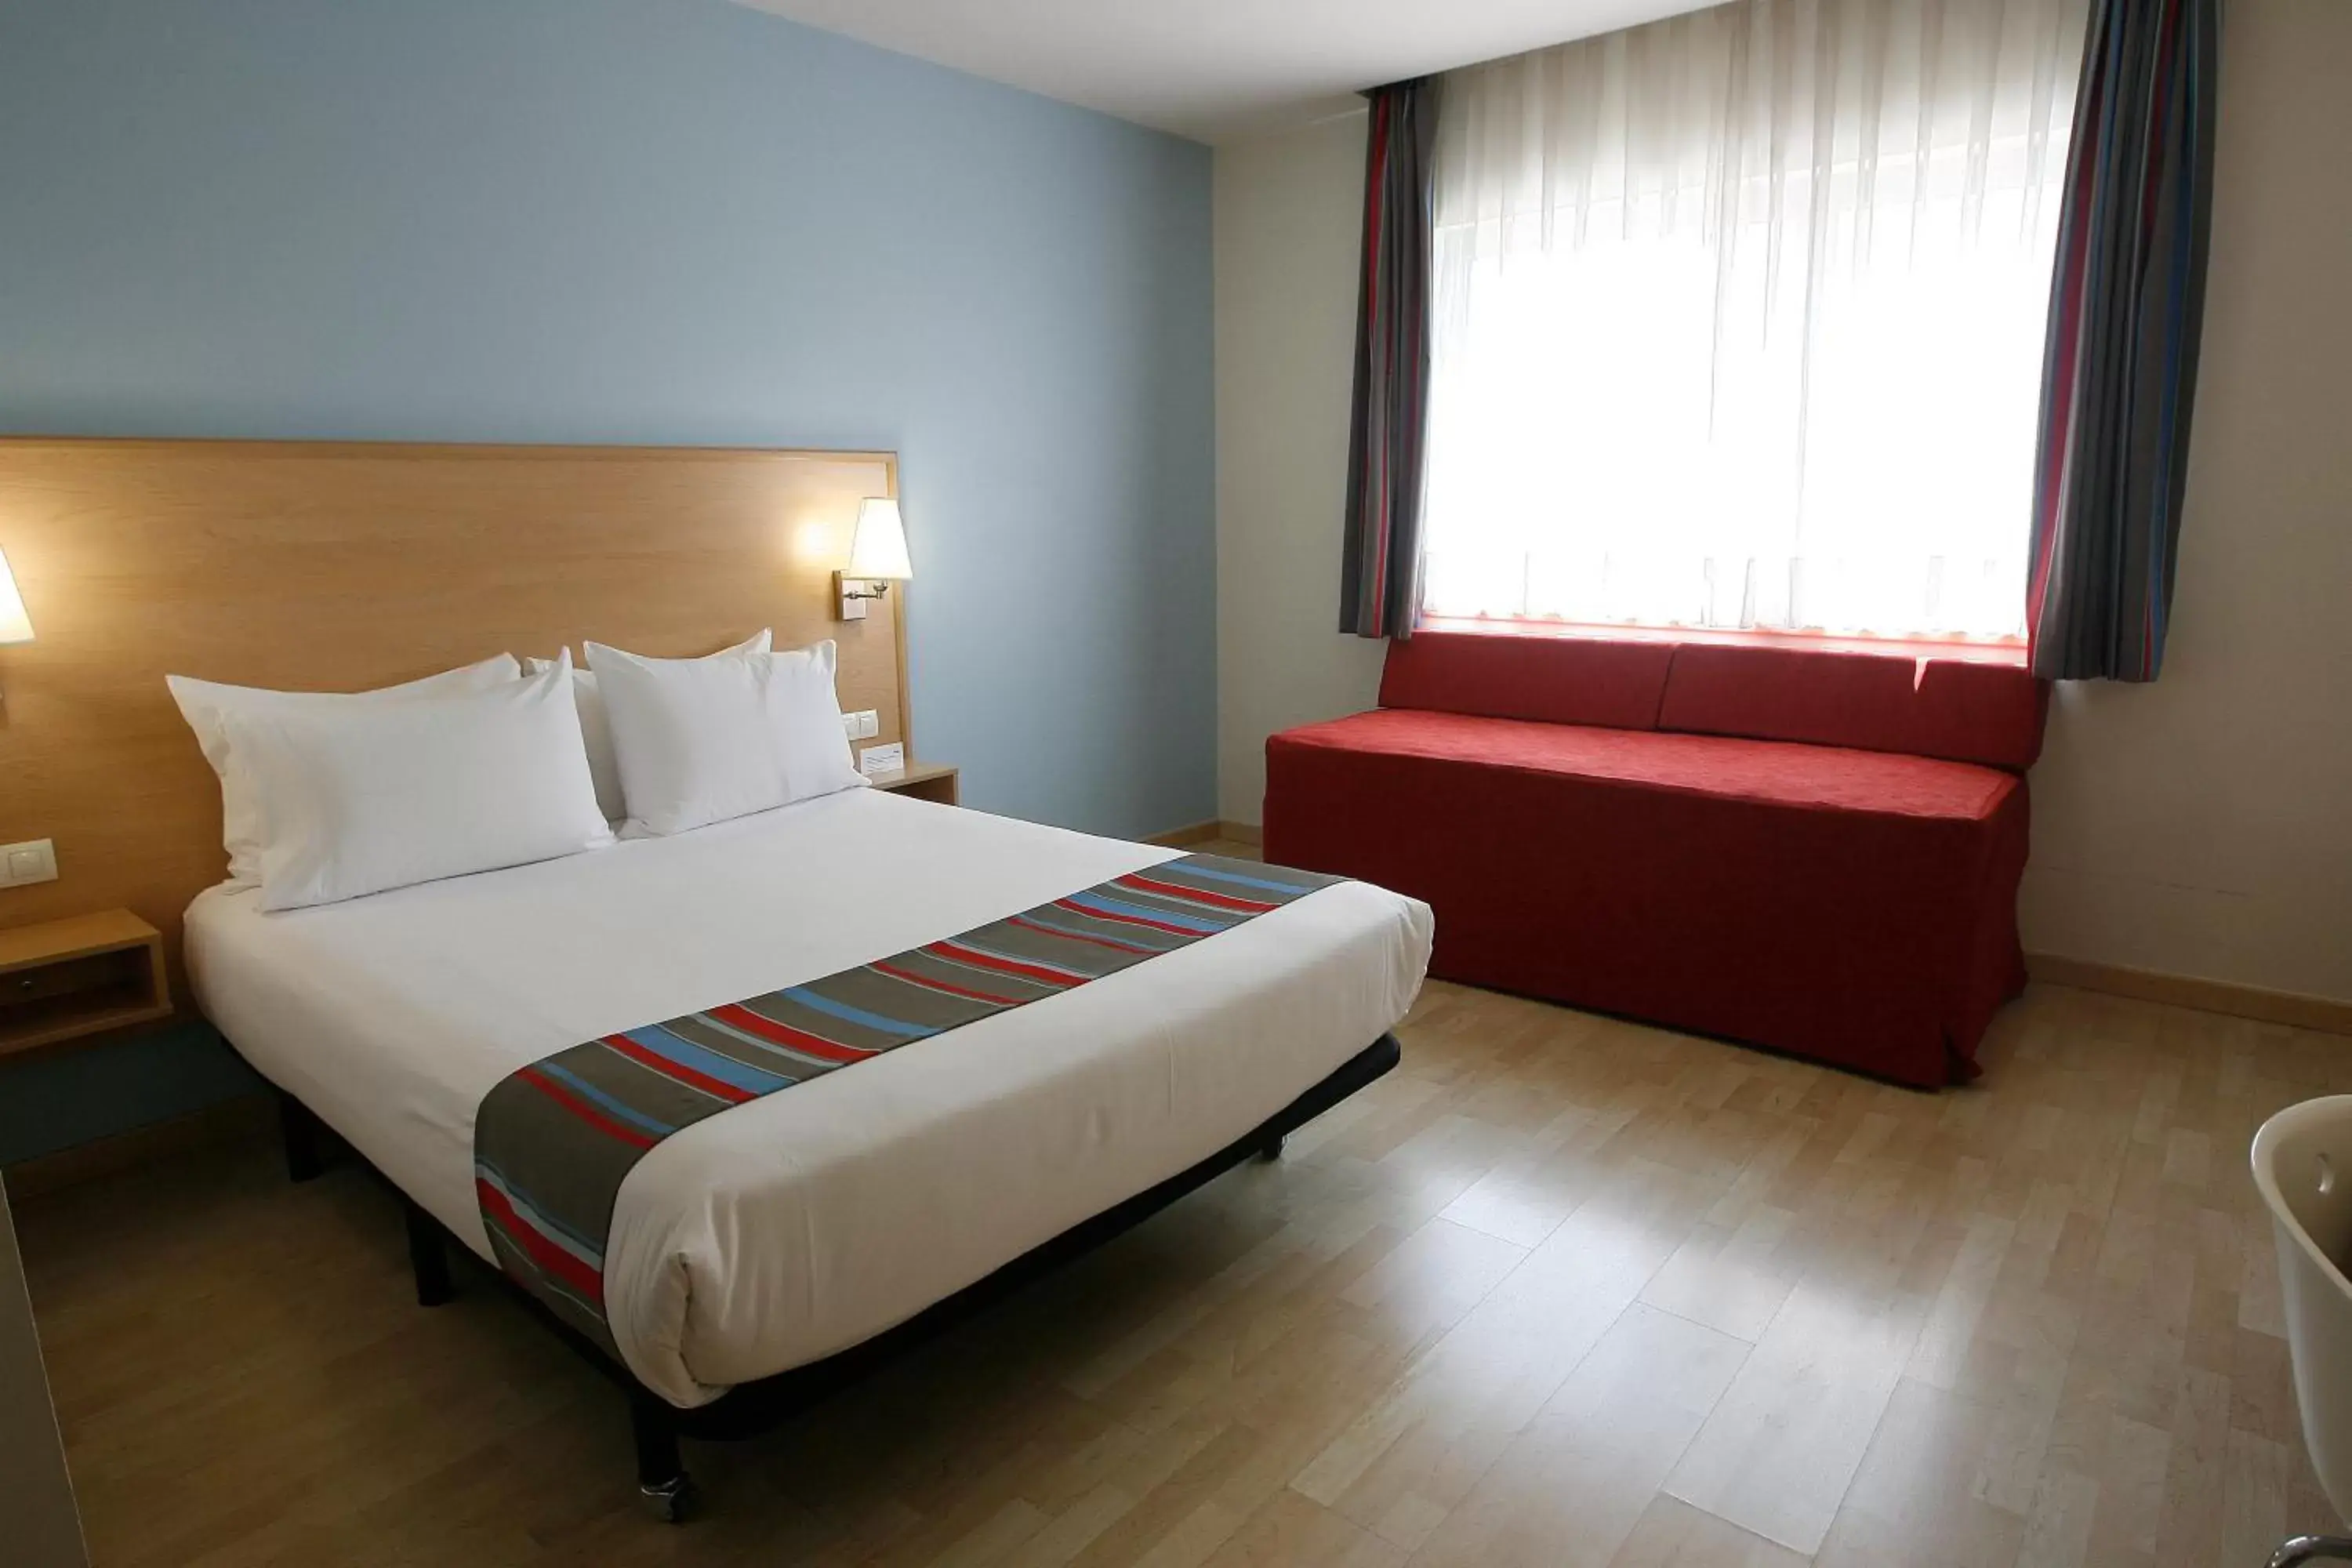 Bedroom, Room Photo in Travelodge Torrelaguna